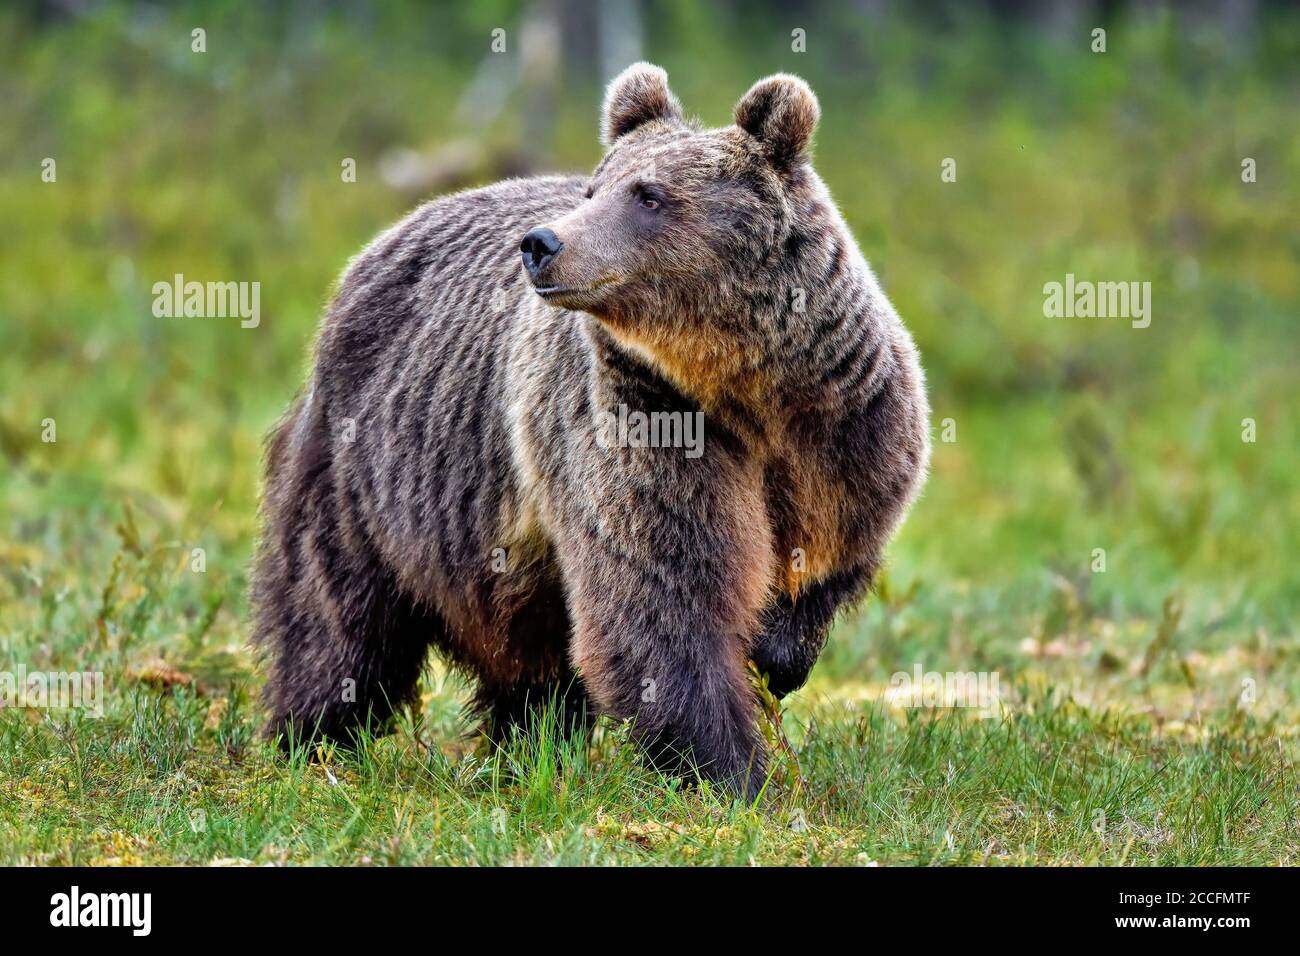 Brown bear at the swamp. Stock Photo